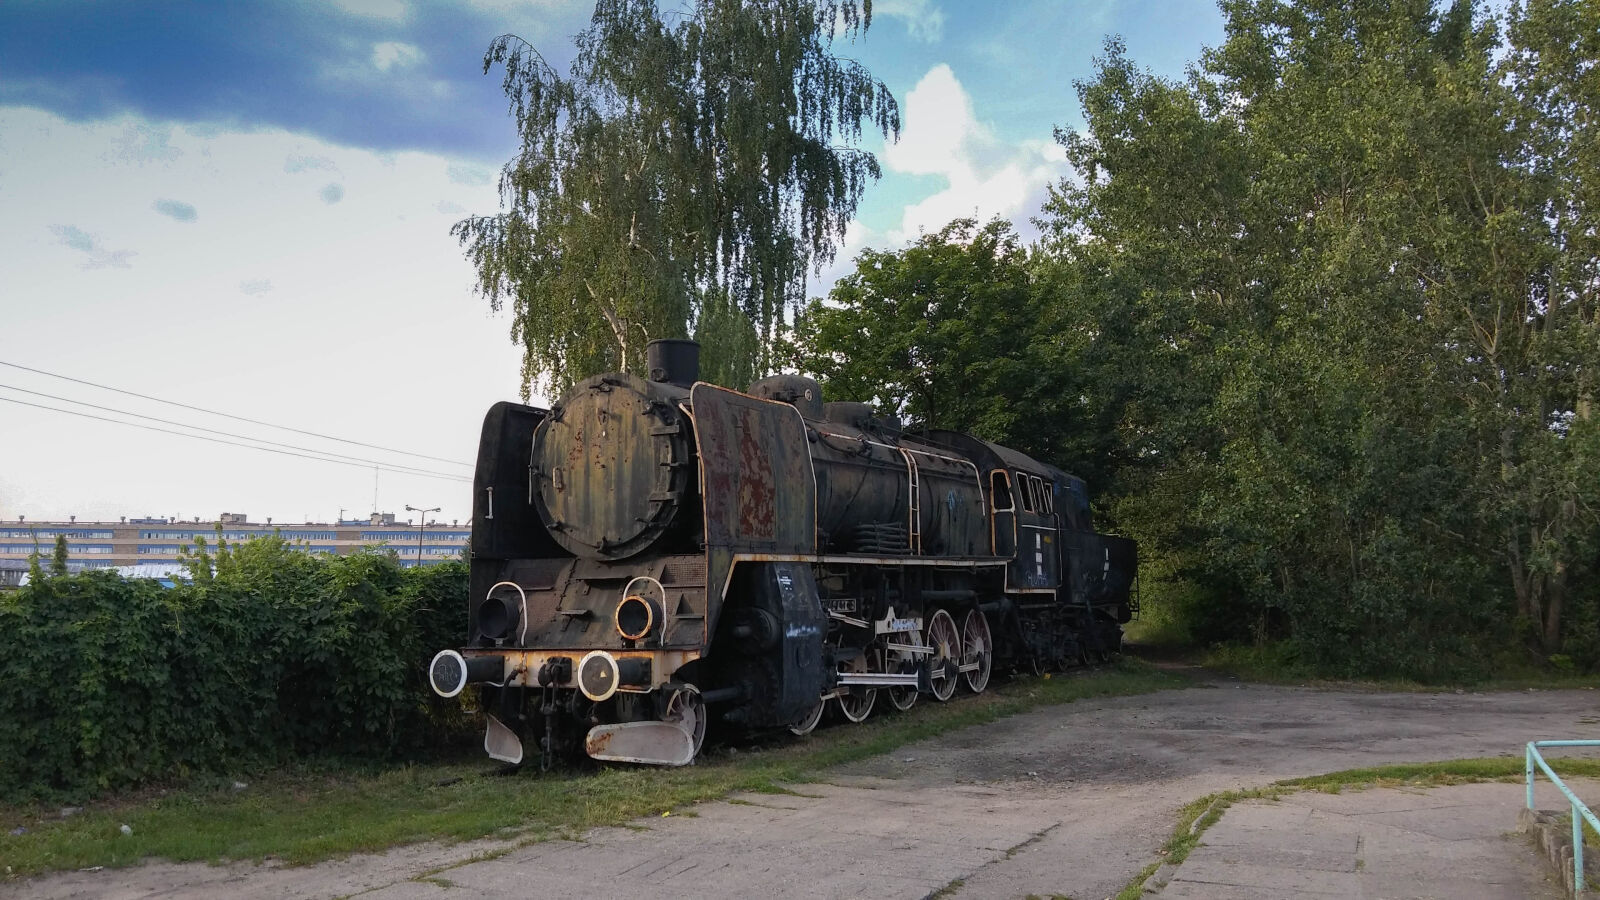 LG ZERO sample photo. Locomotive, old, steam, locomotive photography